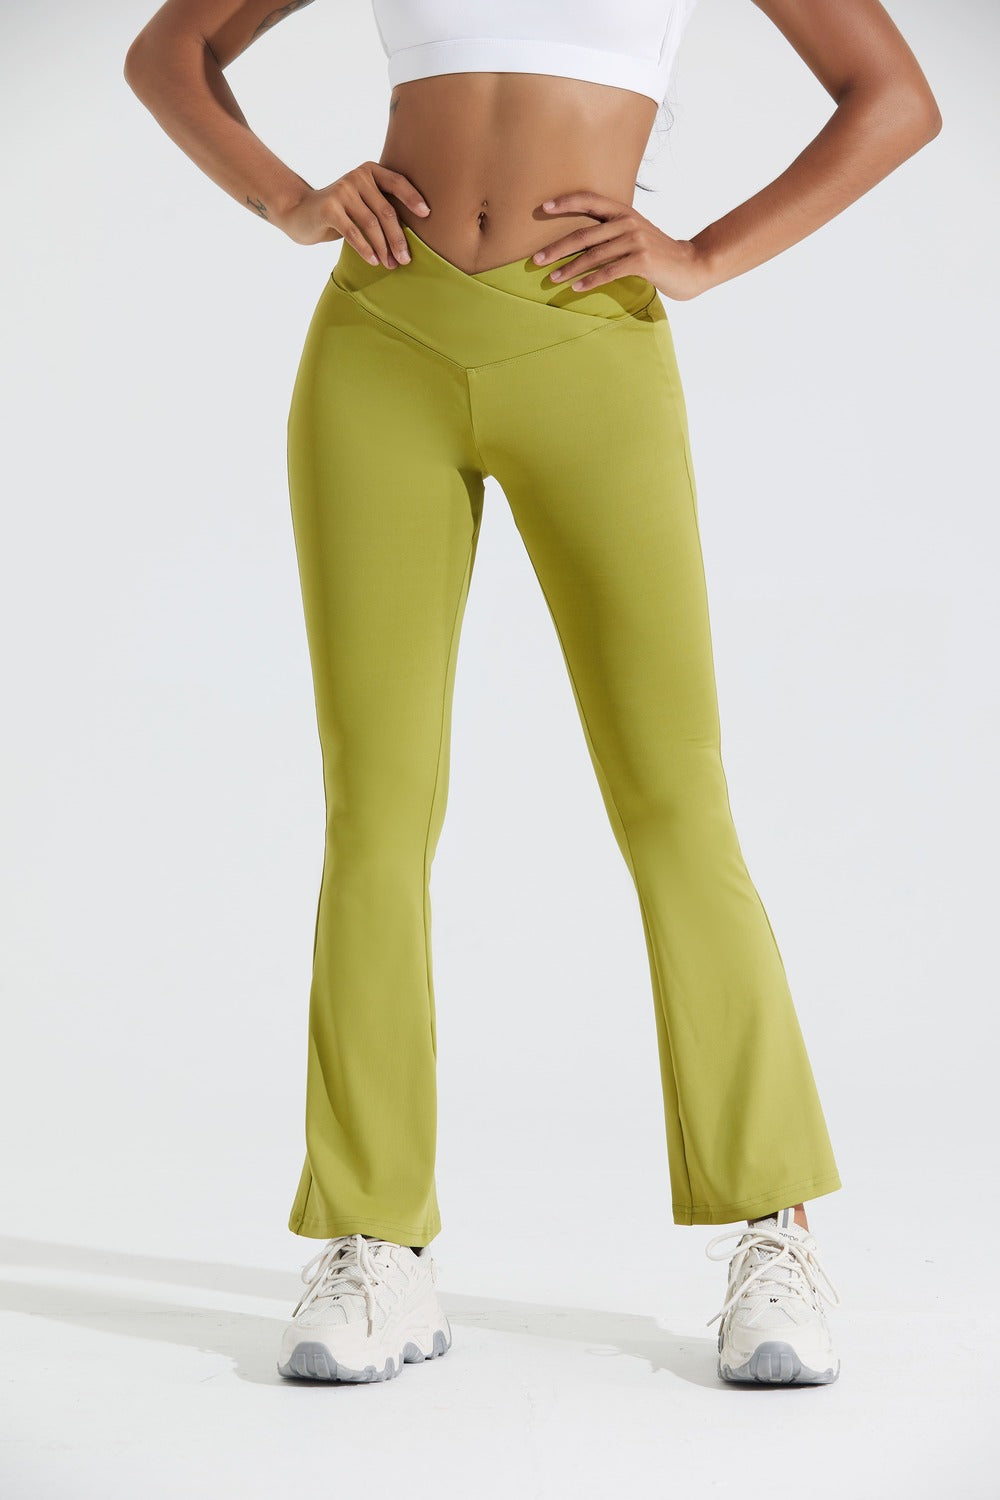 Flare Crossover Legging - LA7 ONLINE Activewear Green / XXL